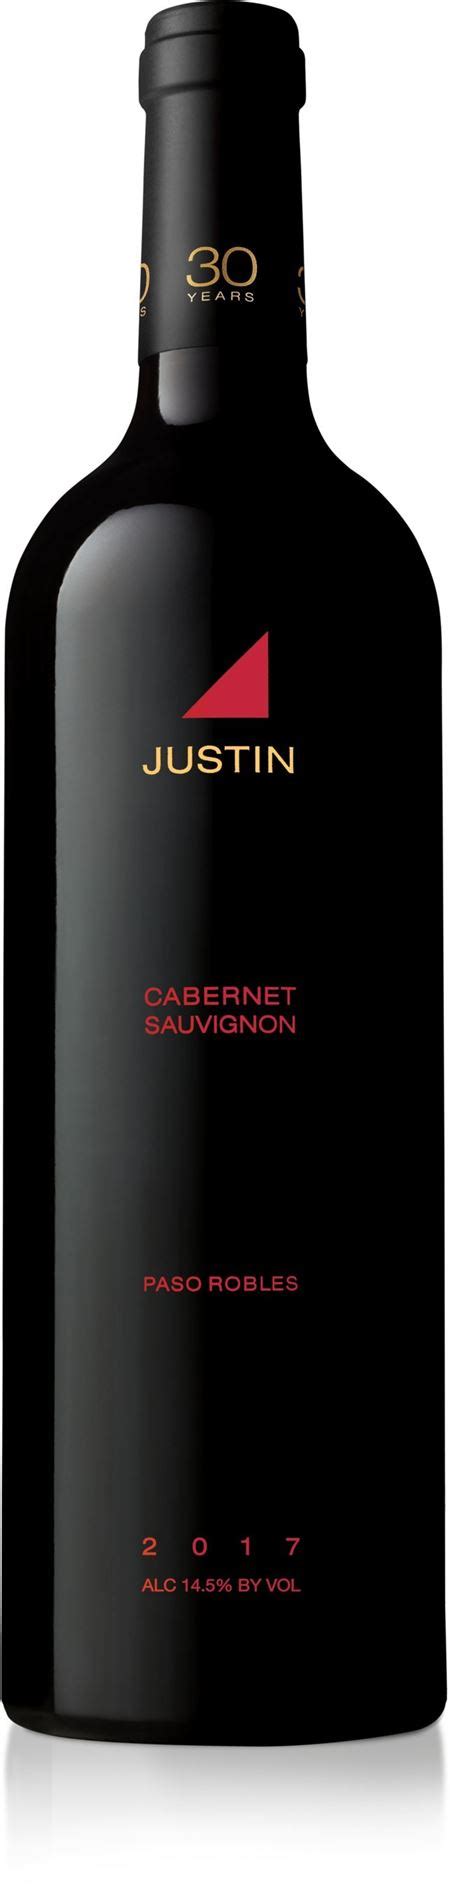 JUSTIN Vineyards & Winery Celebrates The 30th Anniversary Of JUSTIN Cabernet Sauvignon